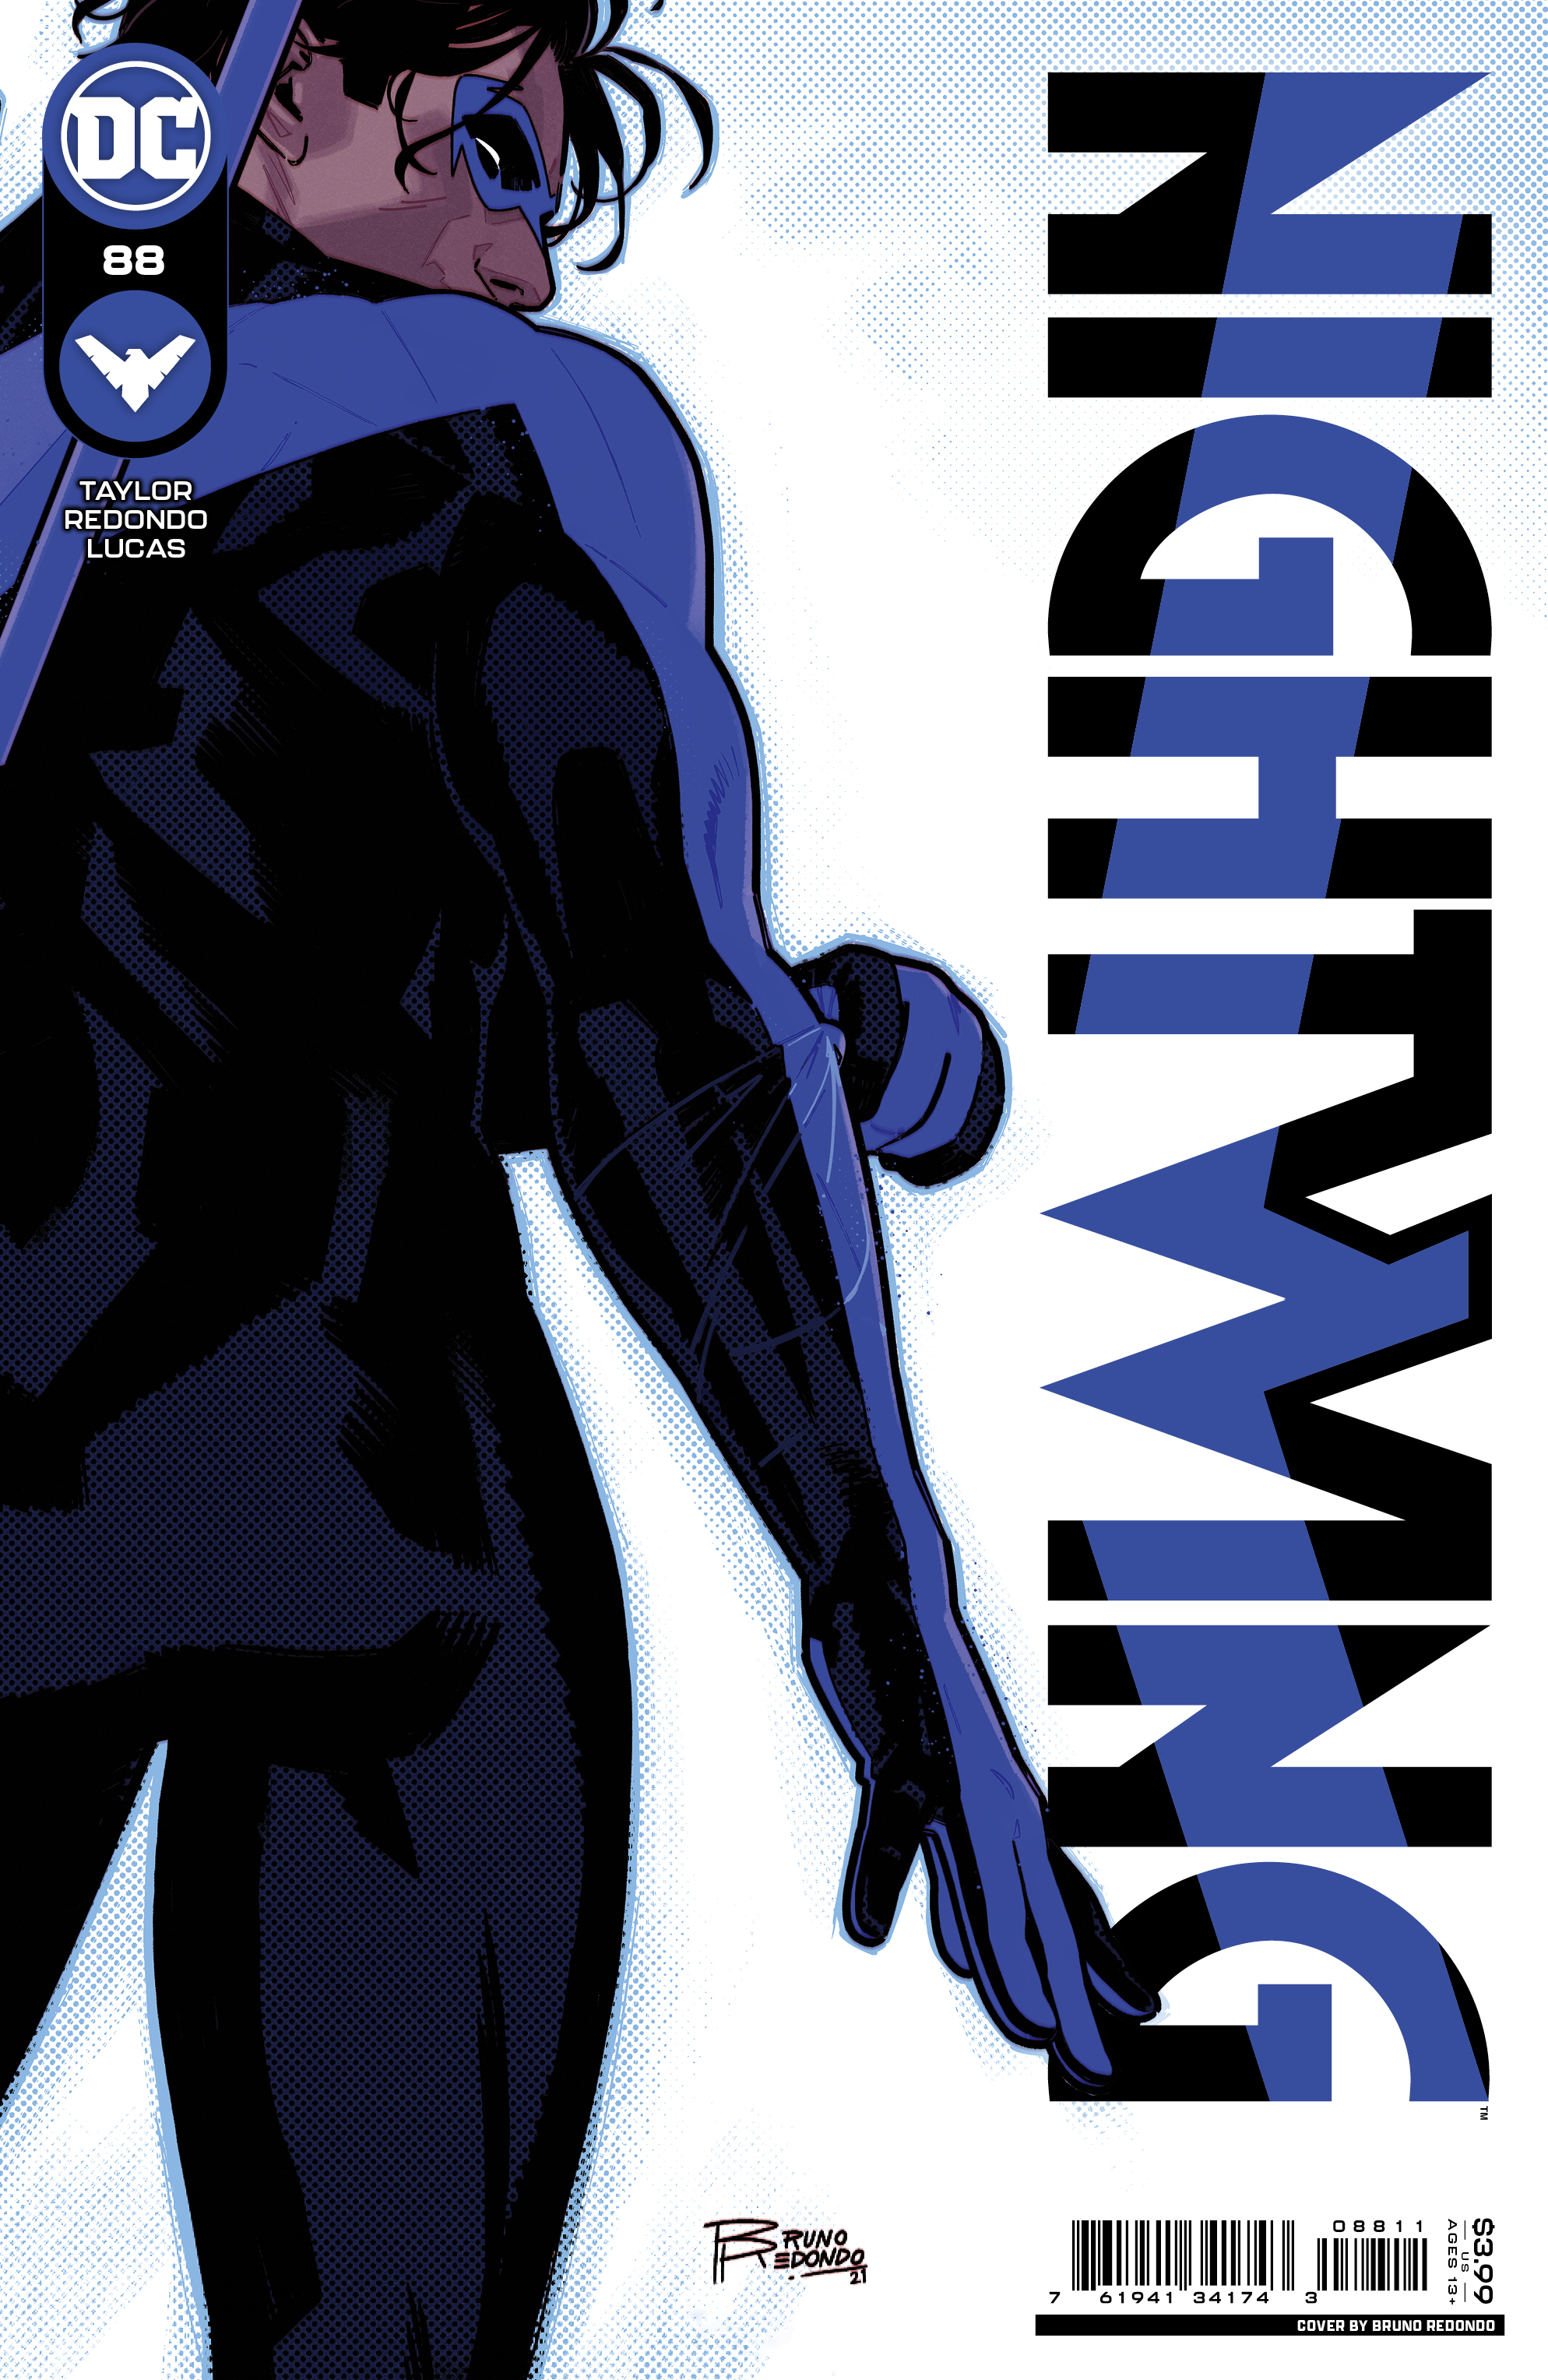 Nightwing #88 Cover A Bruno Redondo (2016)